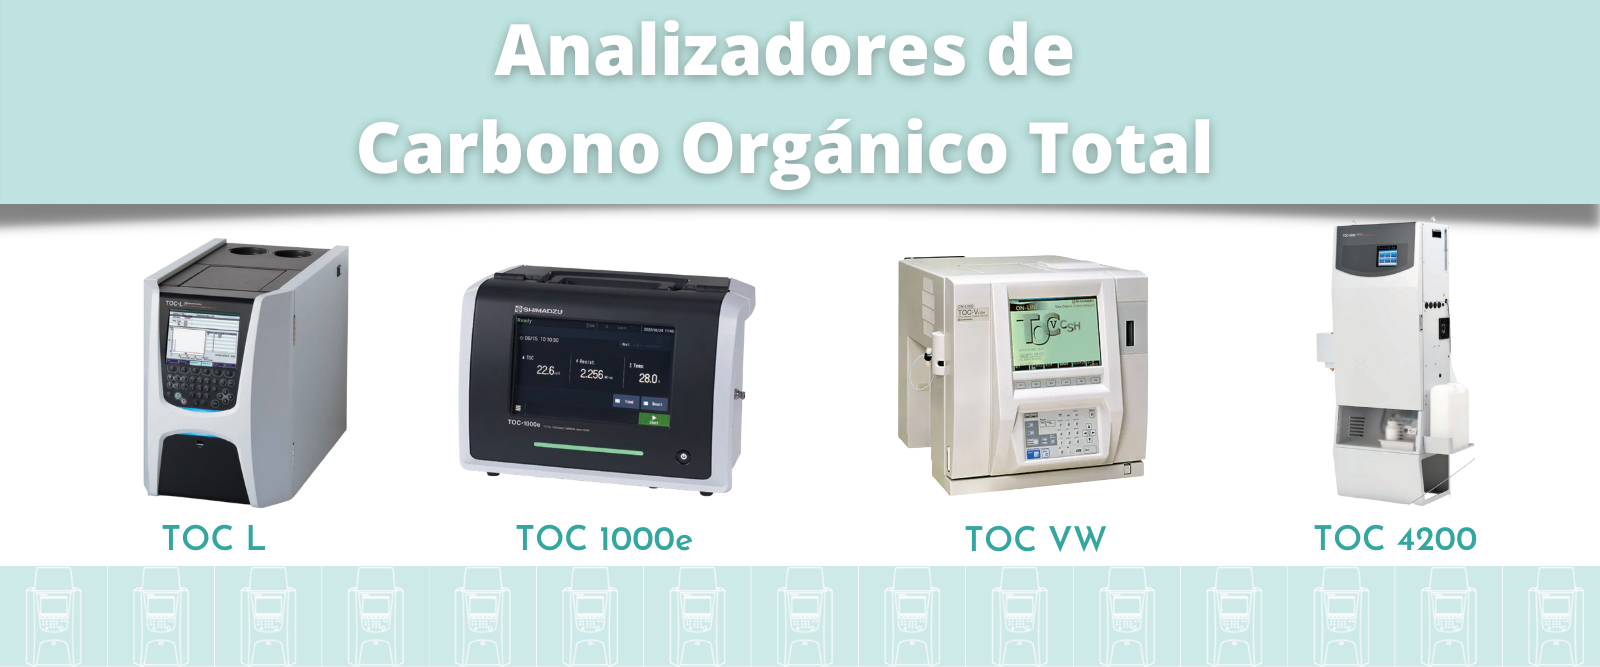 Analizador de Carbono Orgánico Total TOC